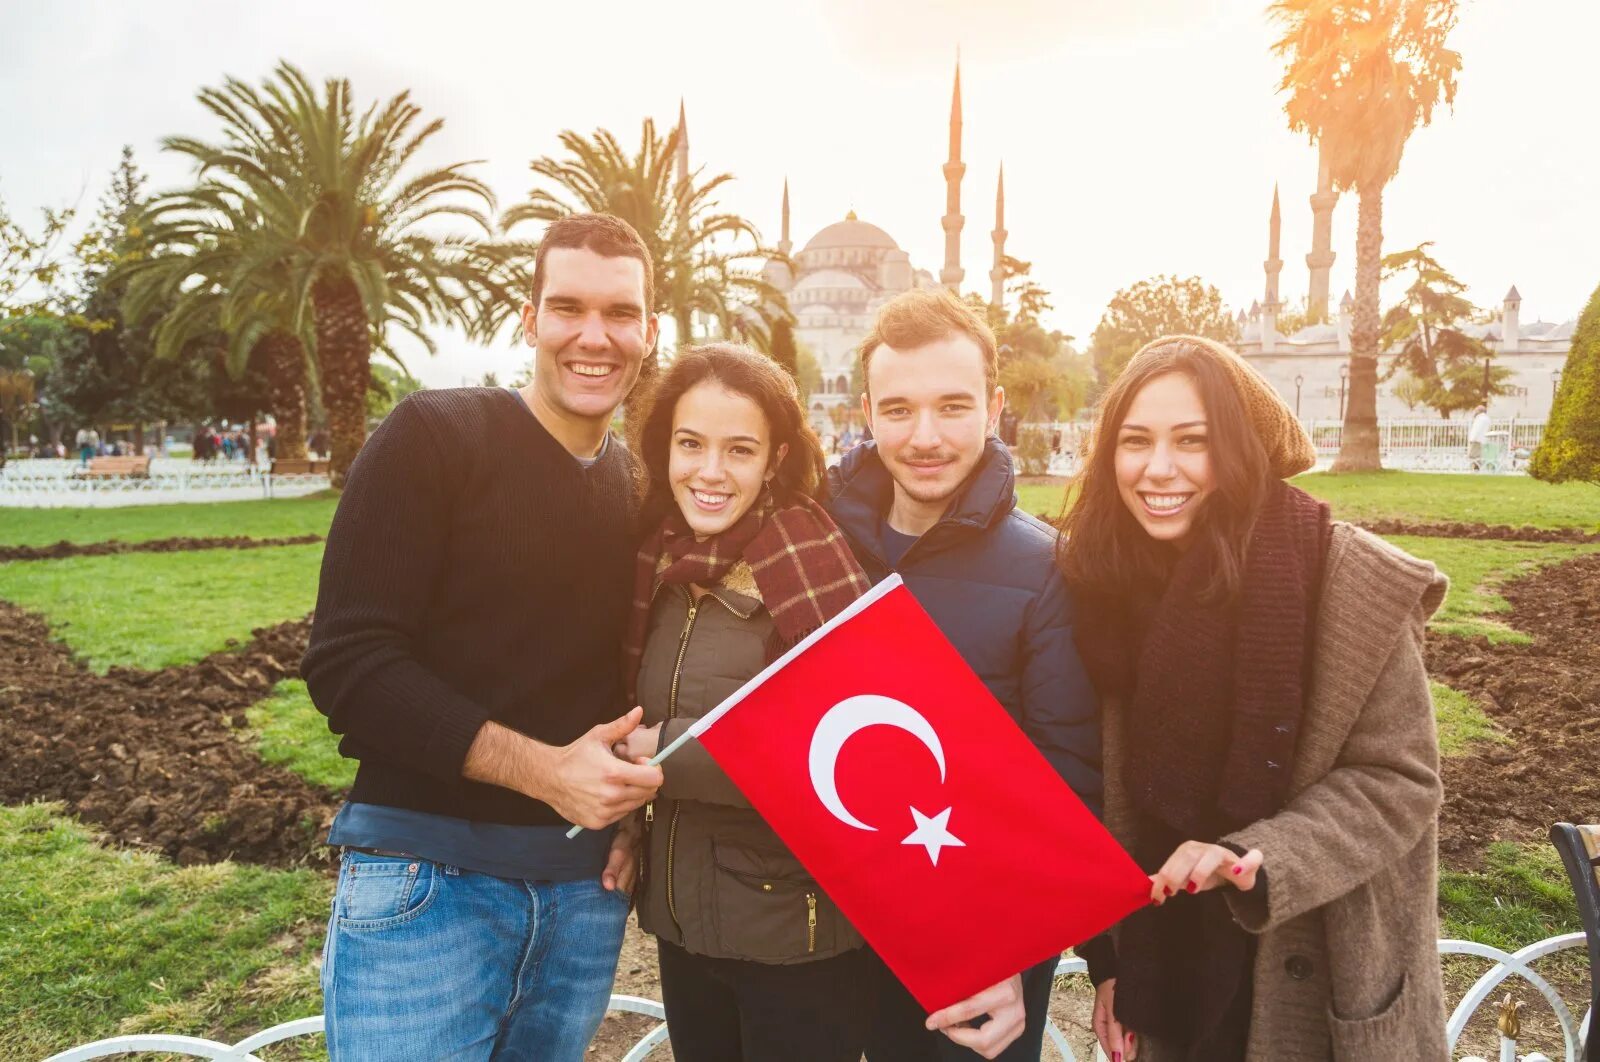 Group turkey. Турция с друзьями. Турецкие друзья. Турецкая молодежь. Друзья в Стамбуле.